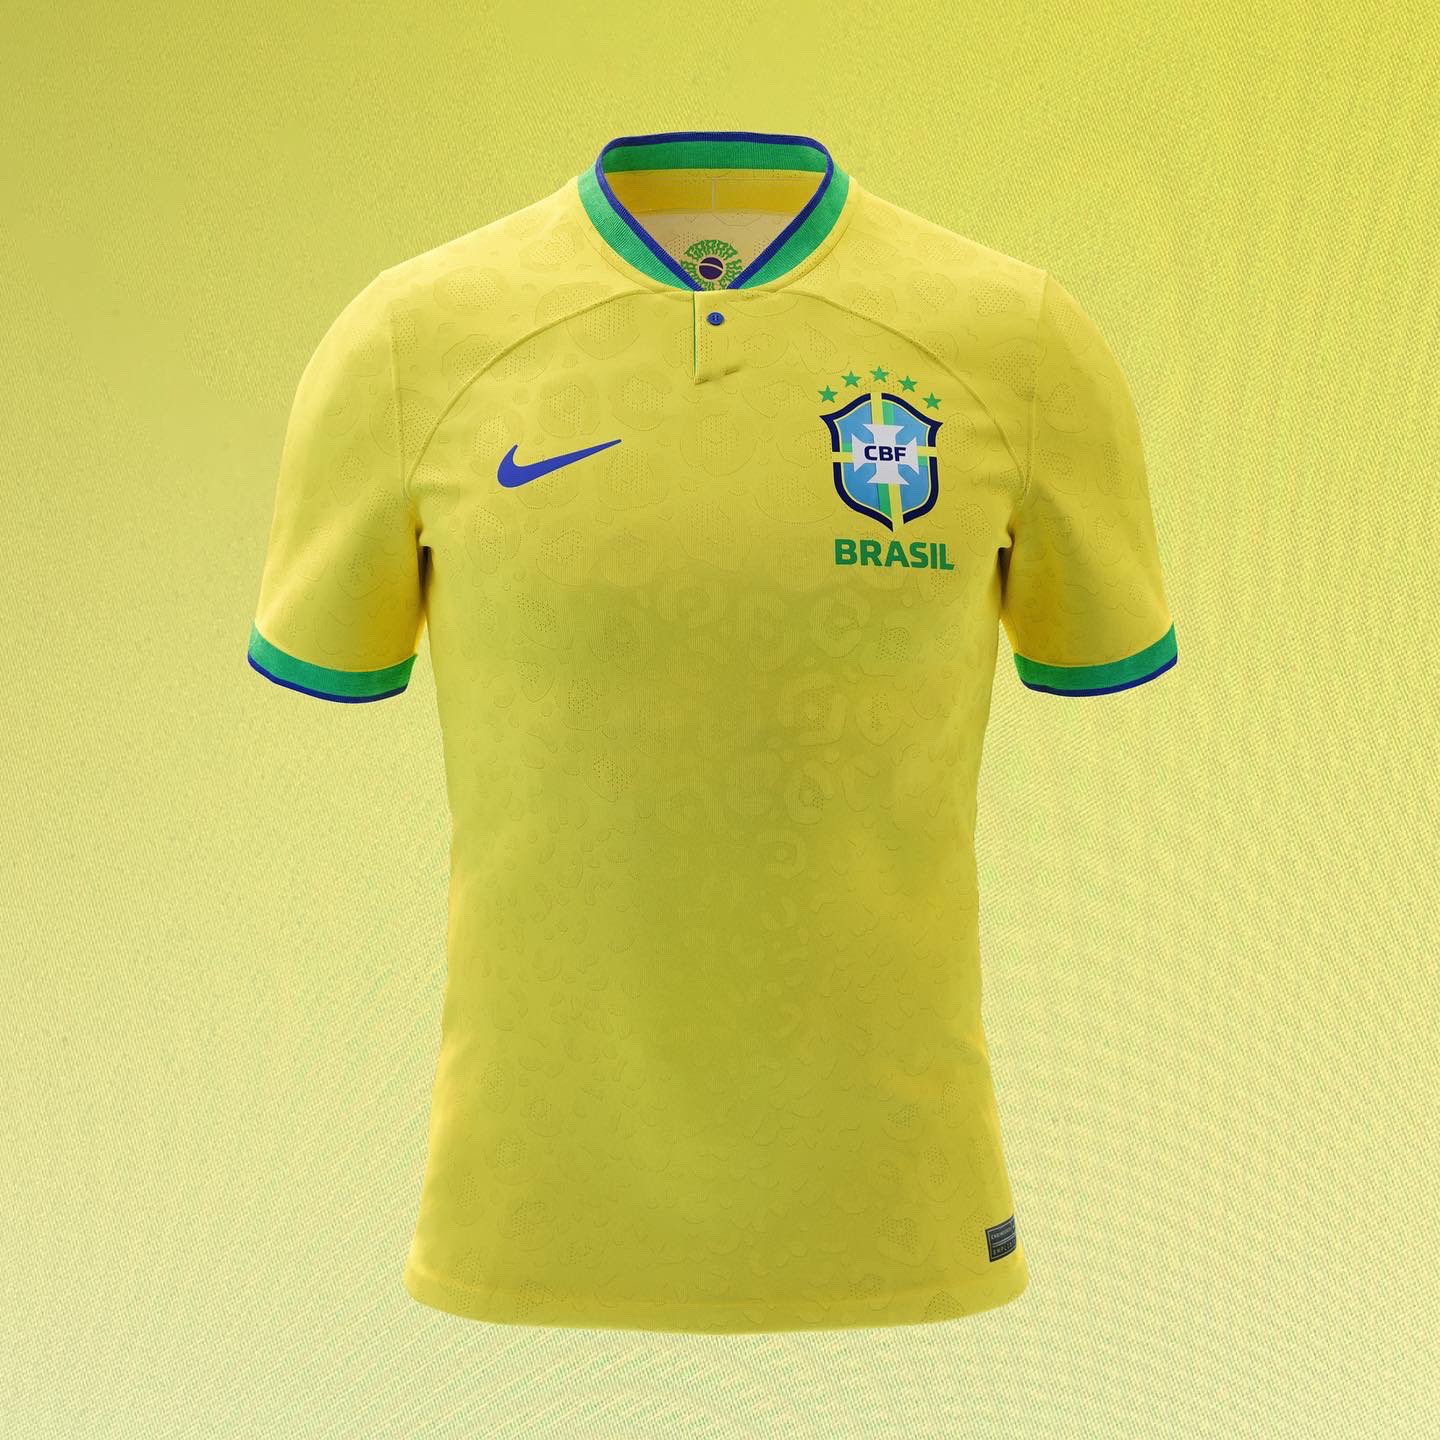 Todo on Twitter: "🇧🇷 Brasil sus camisetas @nikefootball para el Mundial de Qatar 2022: https://t.co/SmdEUE1ydr https://t.co/cYXuzbxuIw" / Twitter